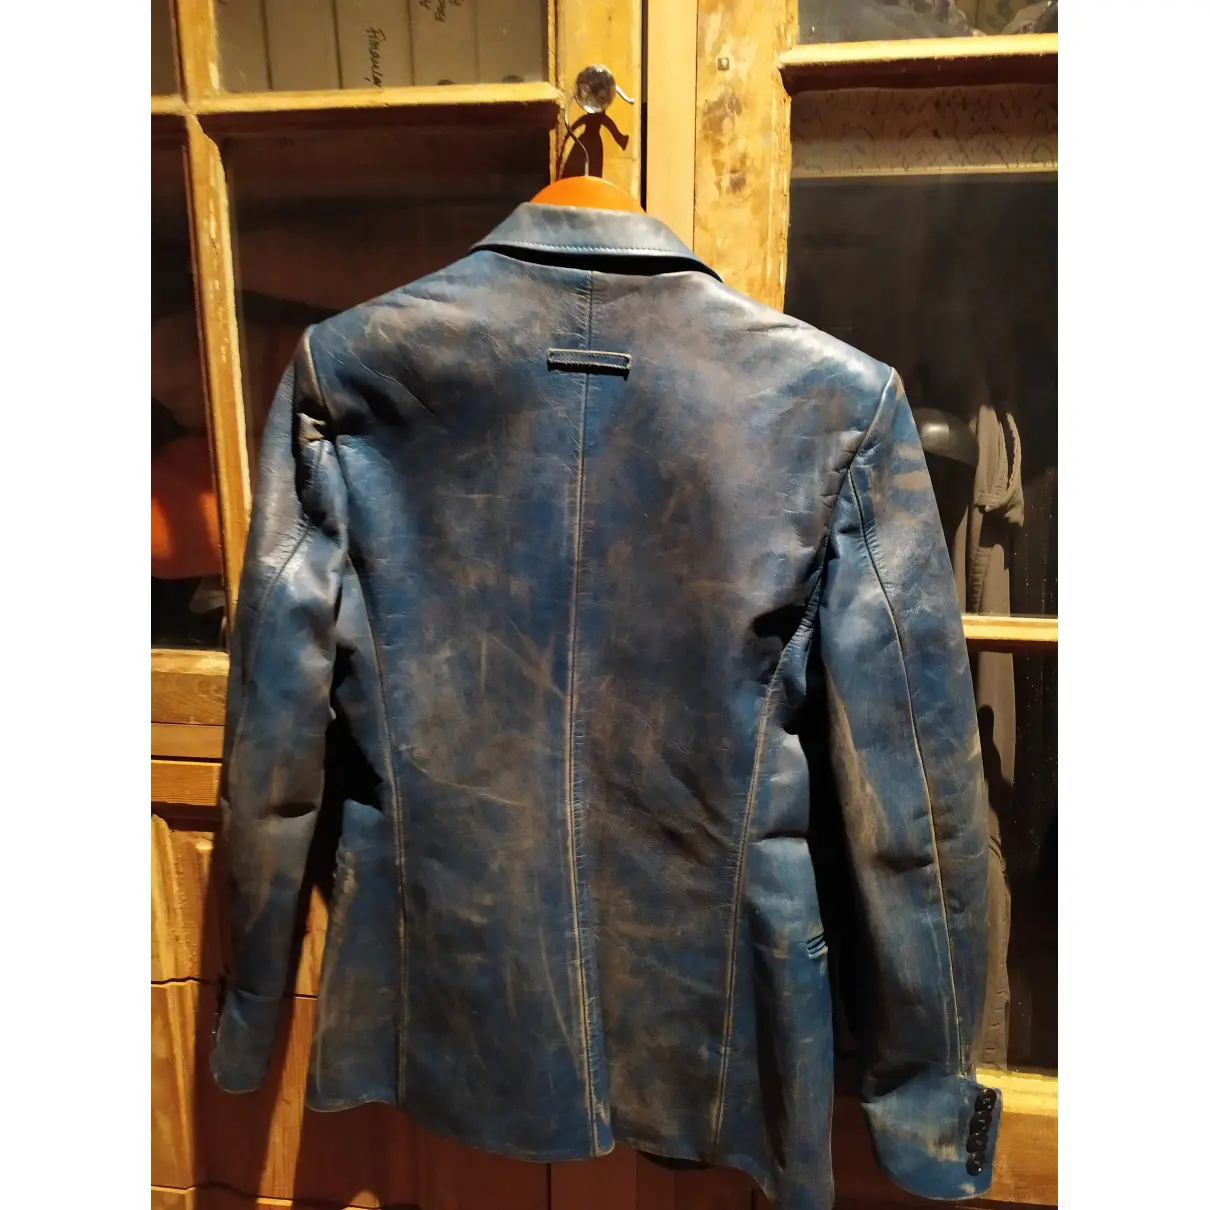 Buy Jean Paul Gaultier Leather biker jacket online - Vintage